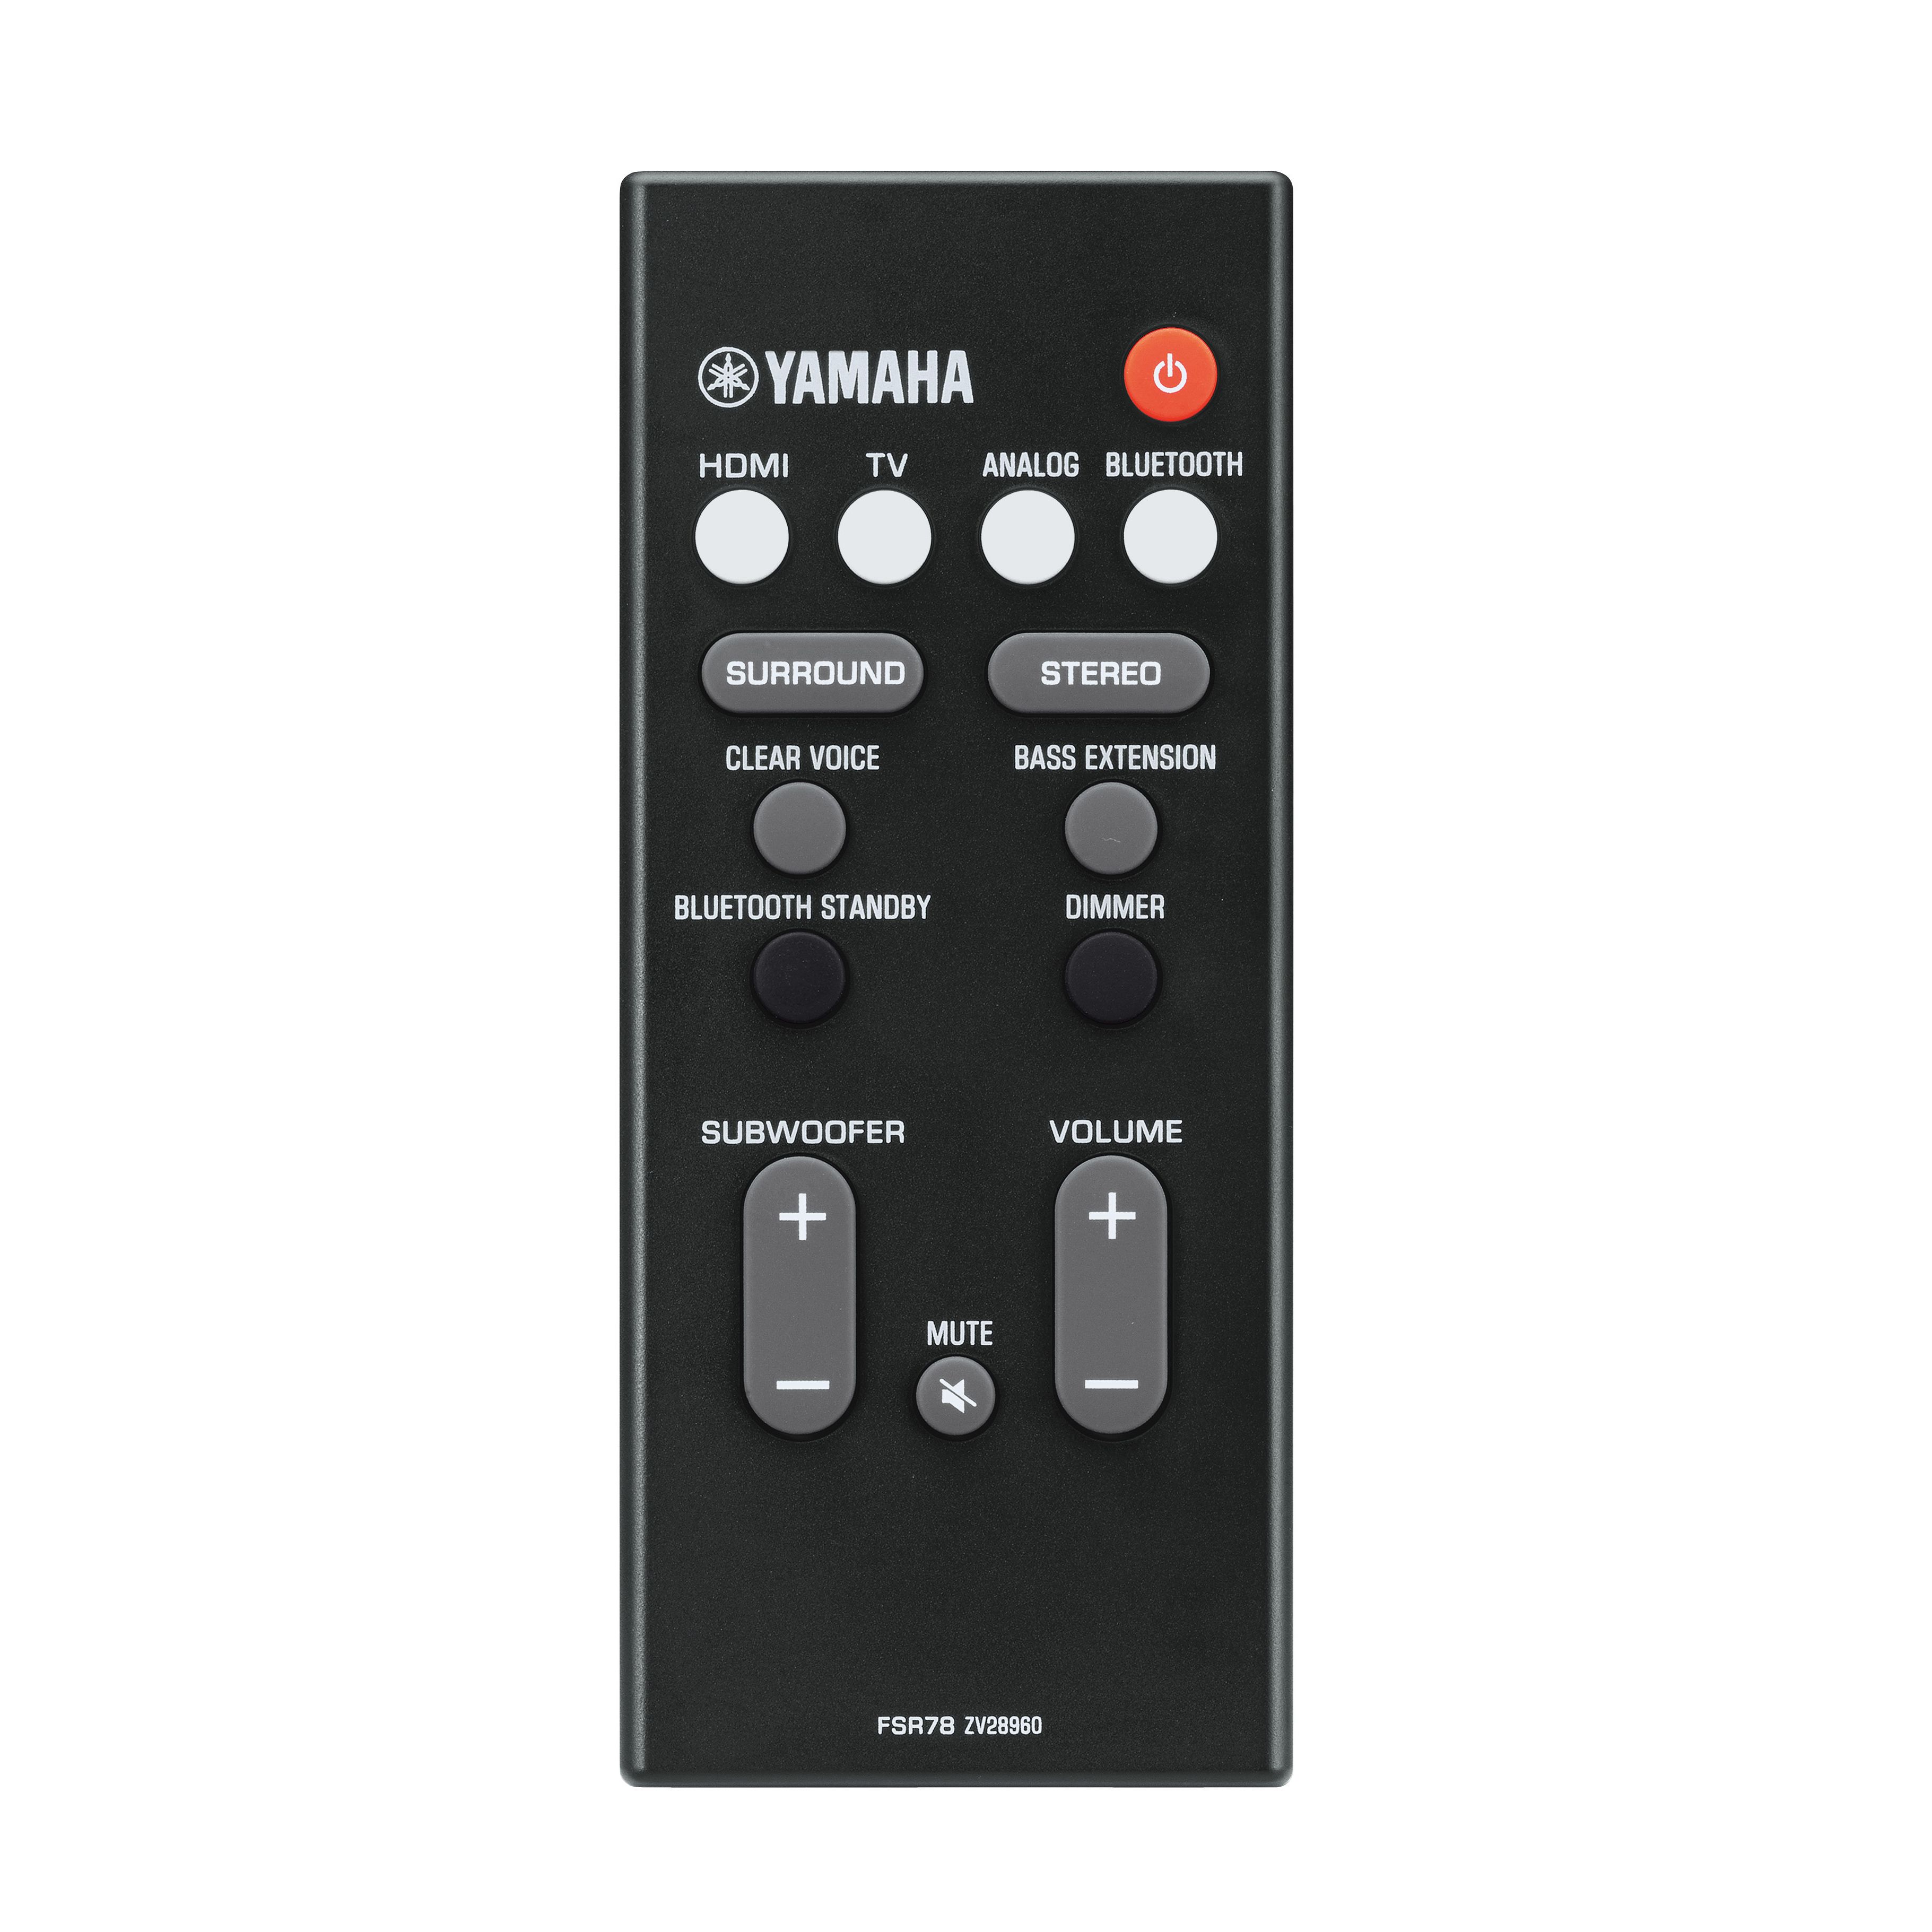 YAS-207 - Overview - Sound Bars Audio & Visual Products - Yamaha - United States